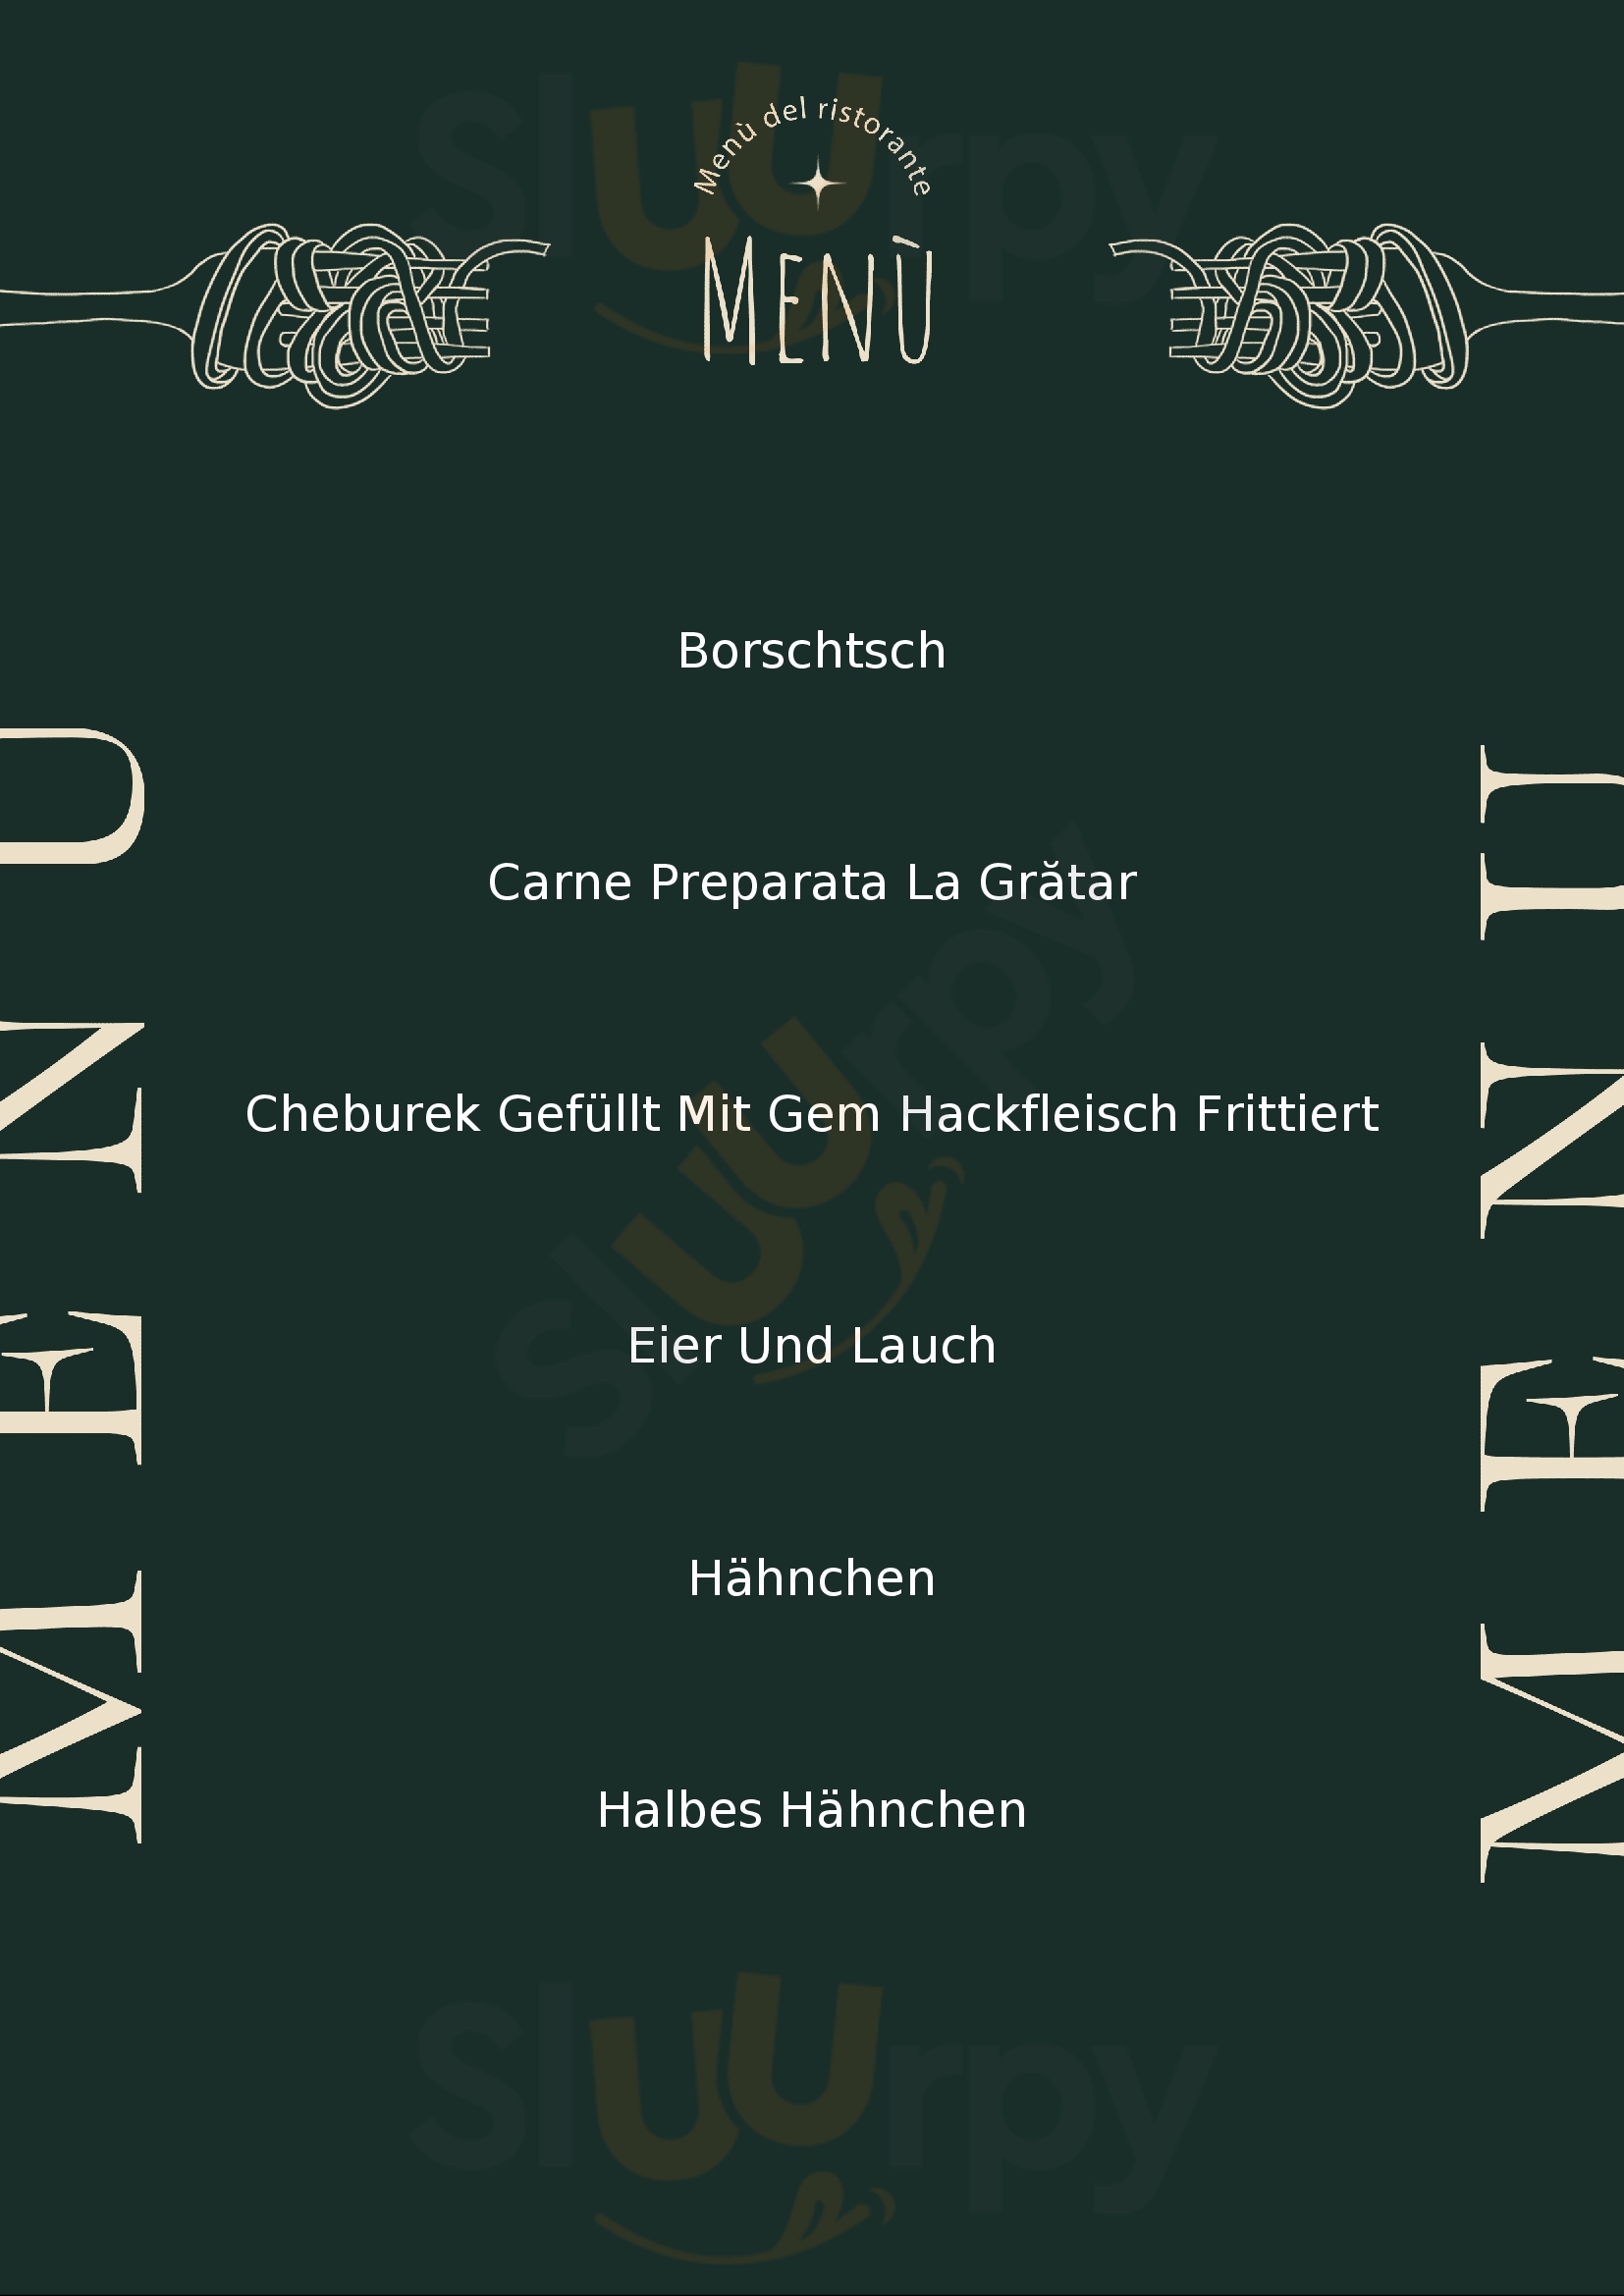 Livas Grillhaus Offenbach Menu - 1